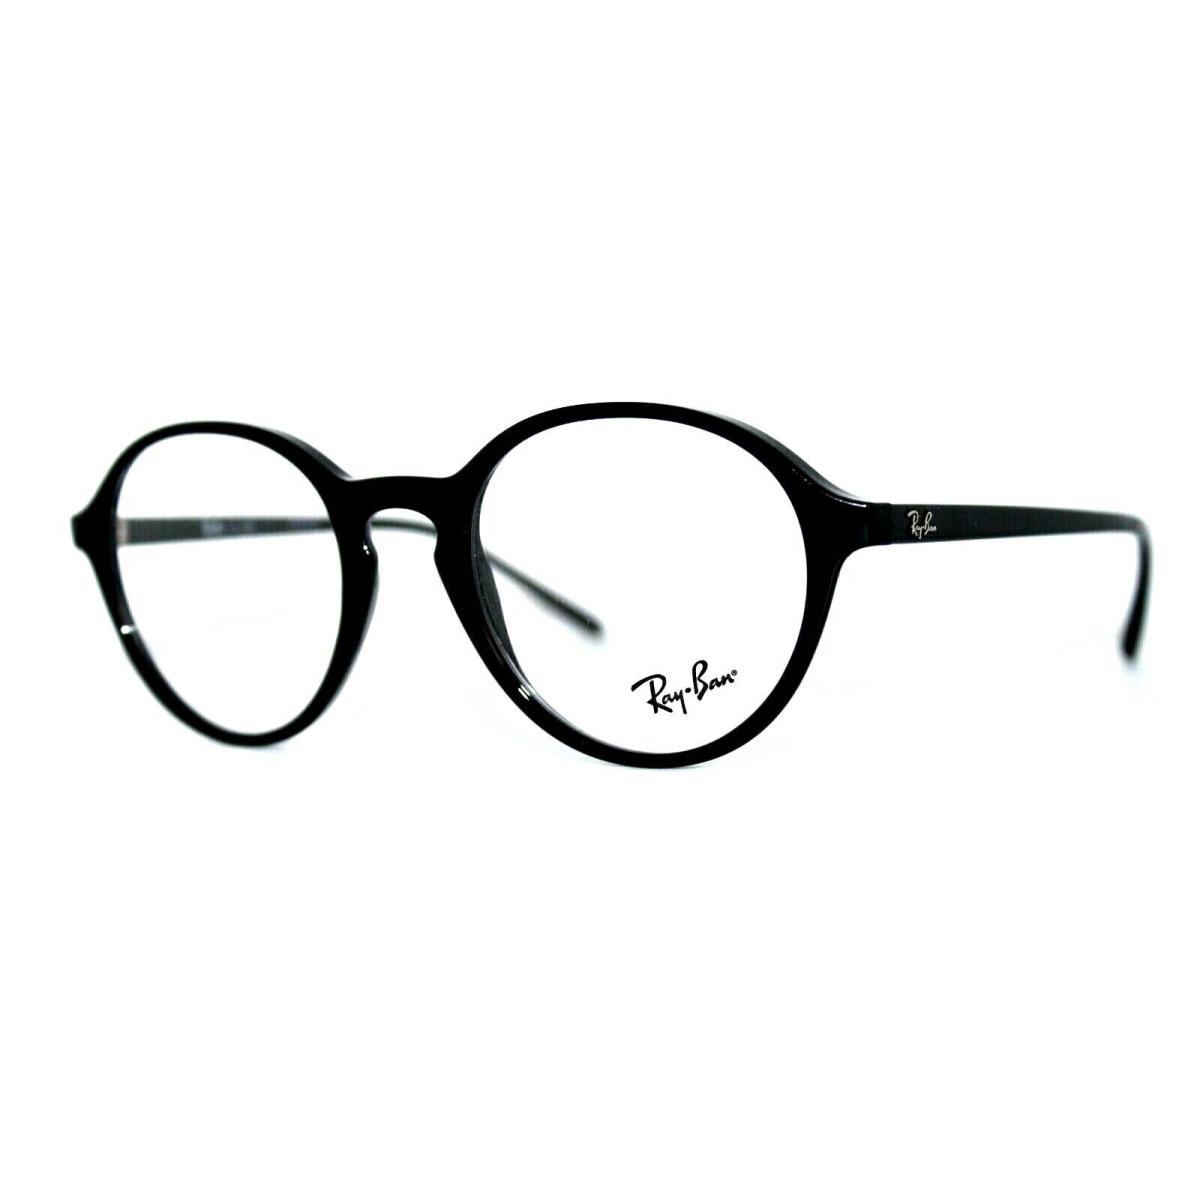 Ray ban RB 7173 2000 Black Eyeglasses Frames 49 20 145MM W case 